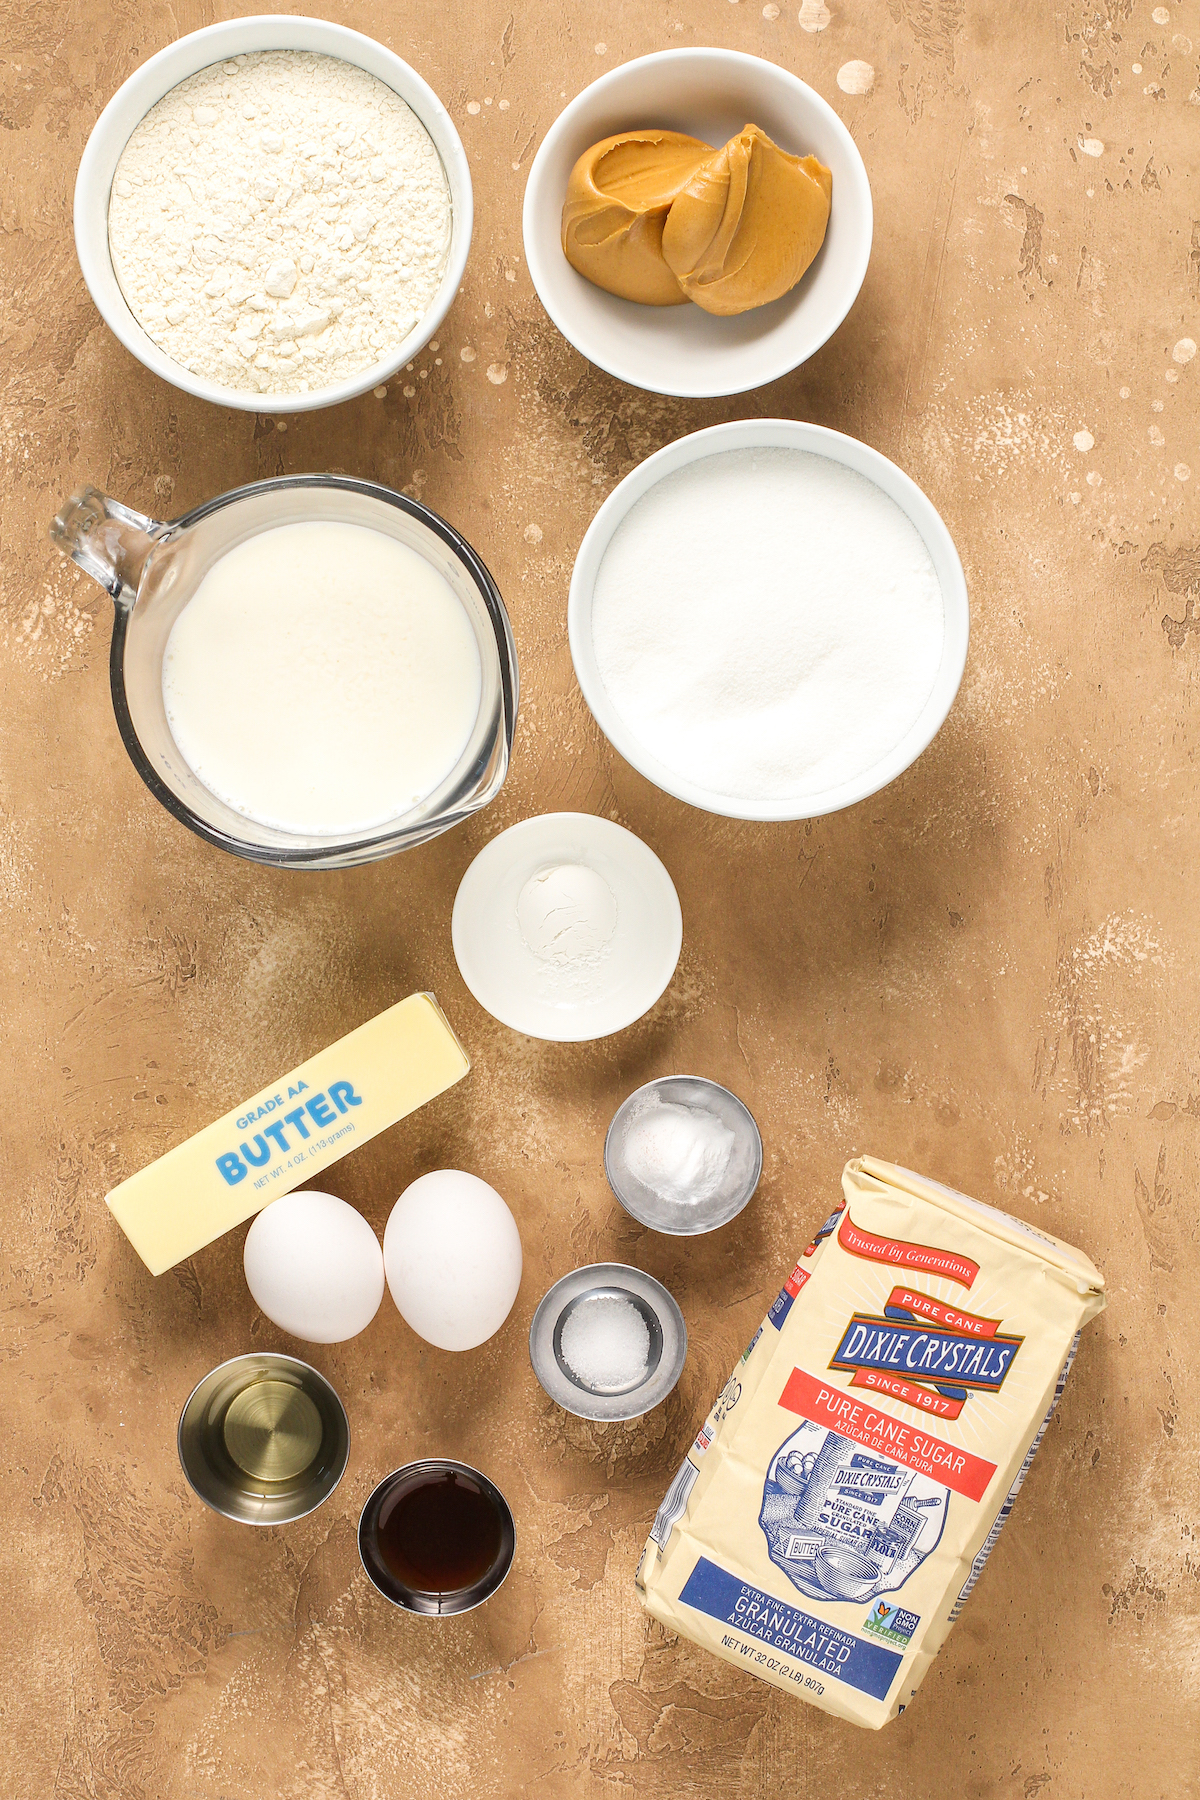 From top left: Flour, peanut butter, buttermilk, sugar, butter, baking powder, eggs, baking soda, vegetable oil, vanilla